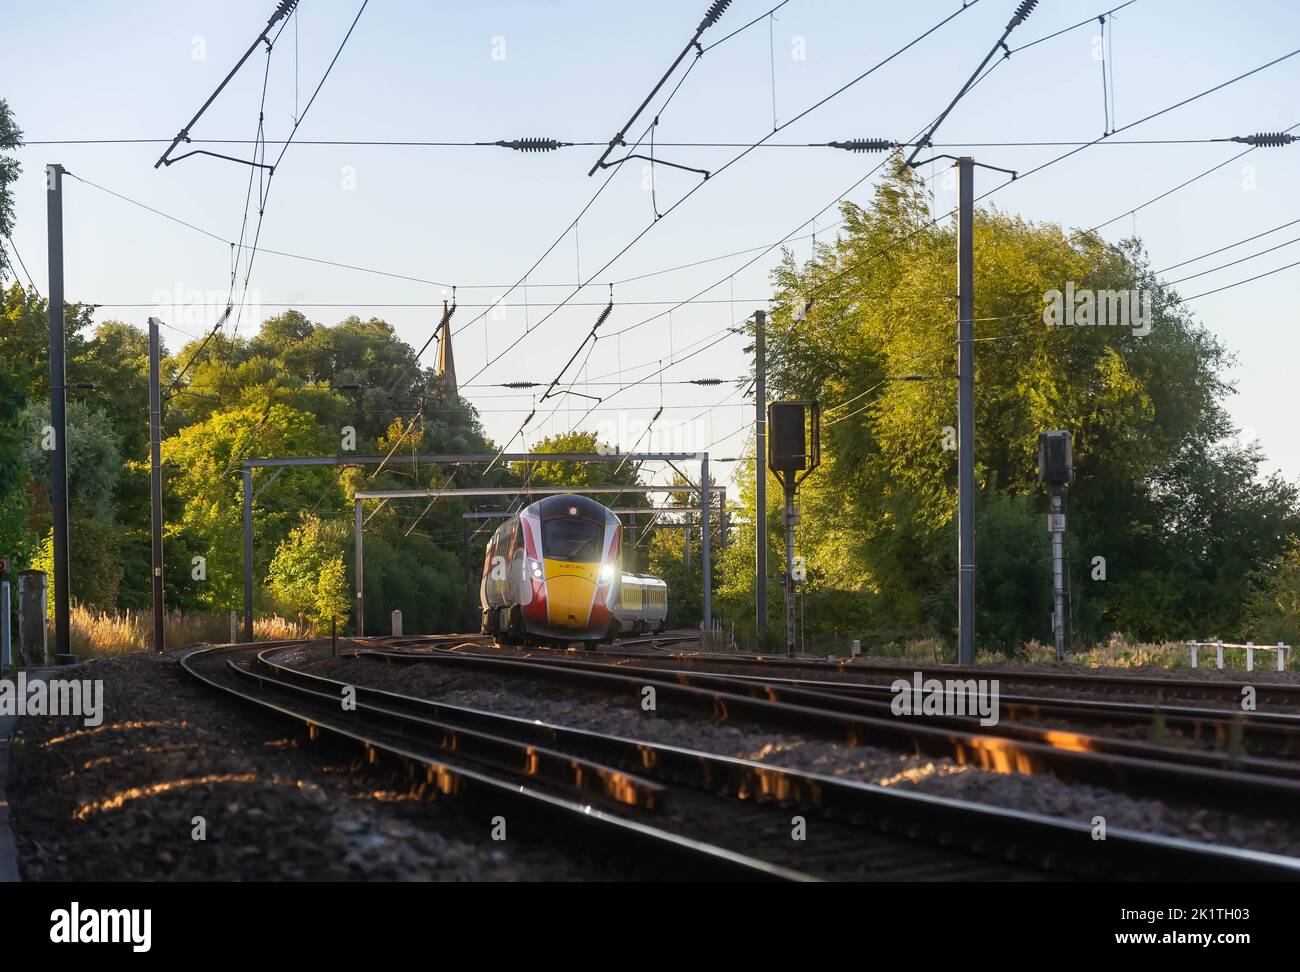 Trains, East Coast Main Line, LNER , Intercity Trains, London to Edinburgh trains, London to Leeds trains Stock Photo